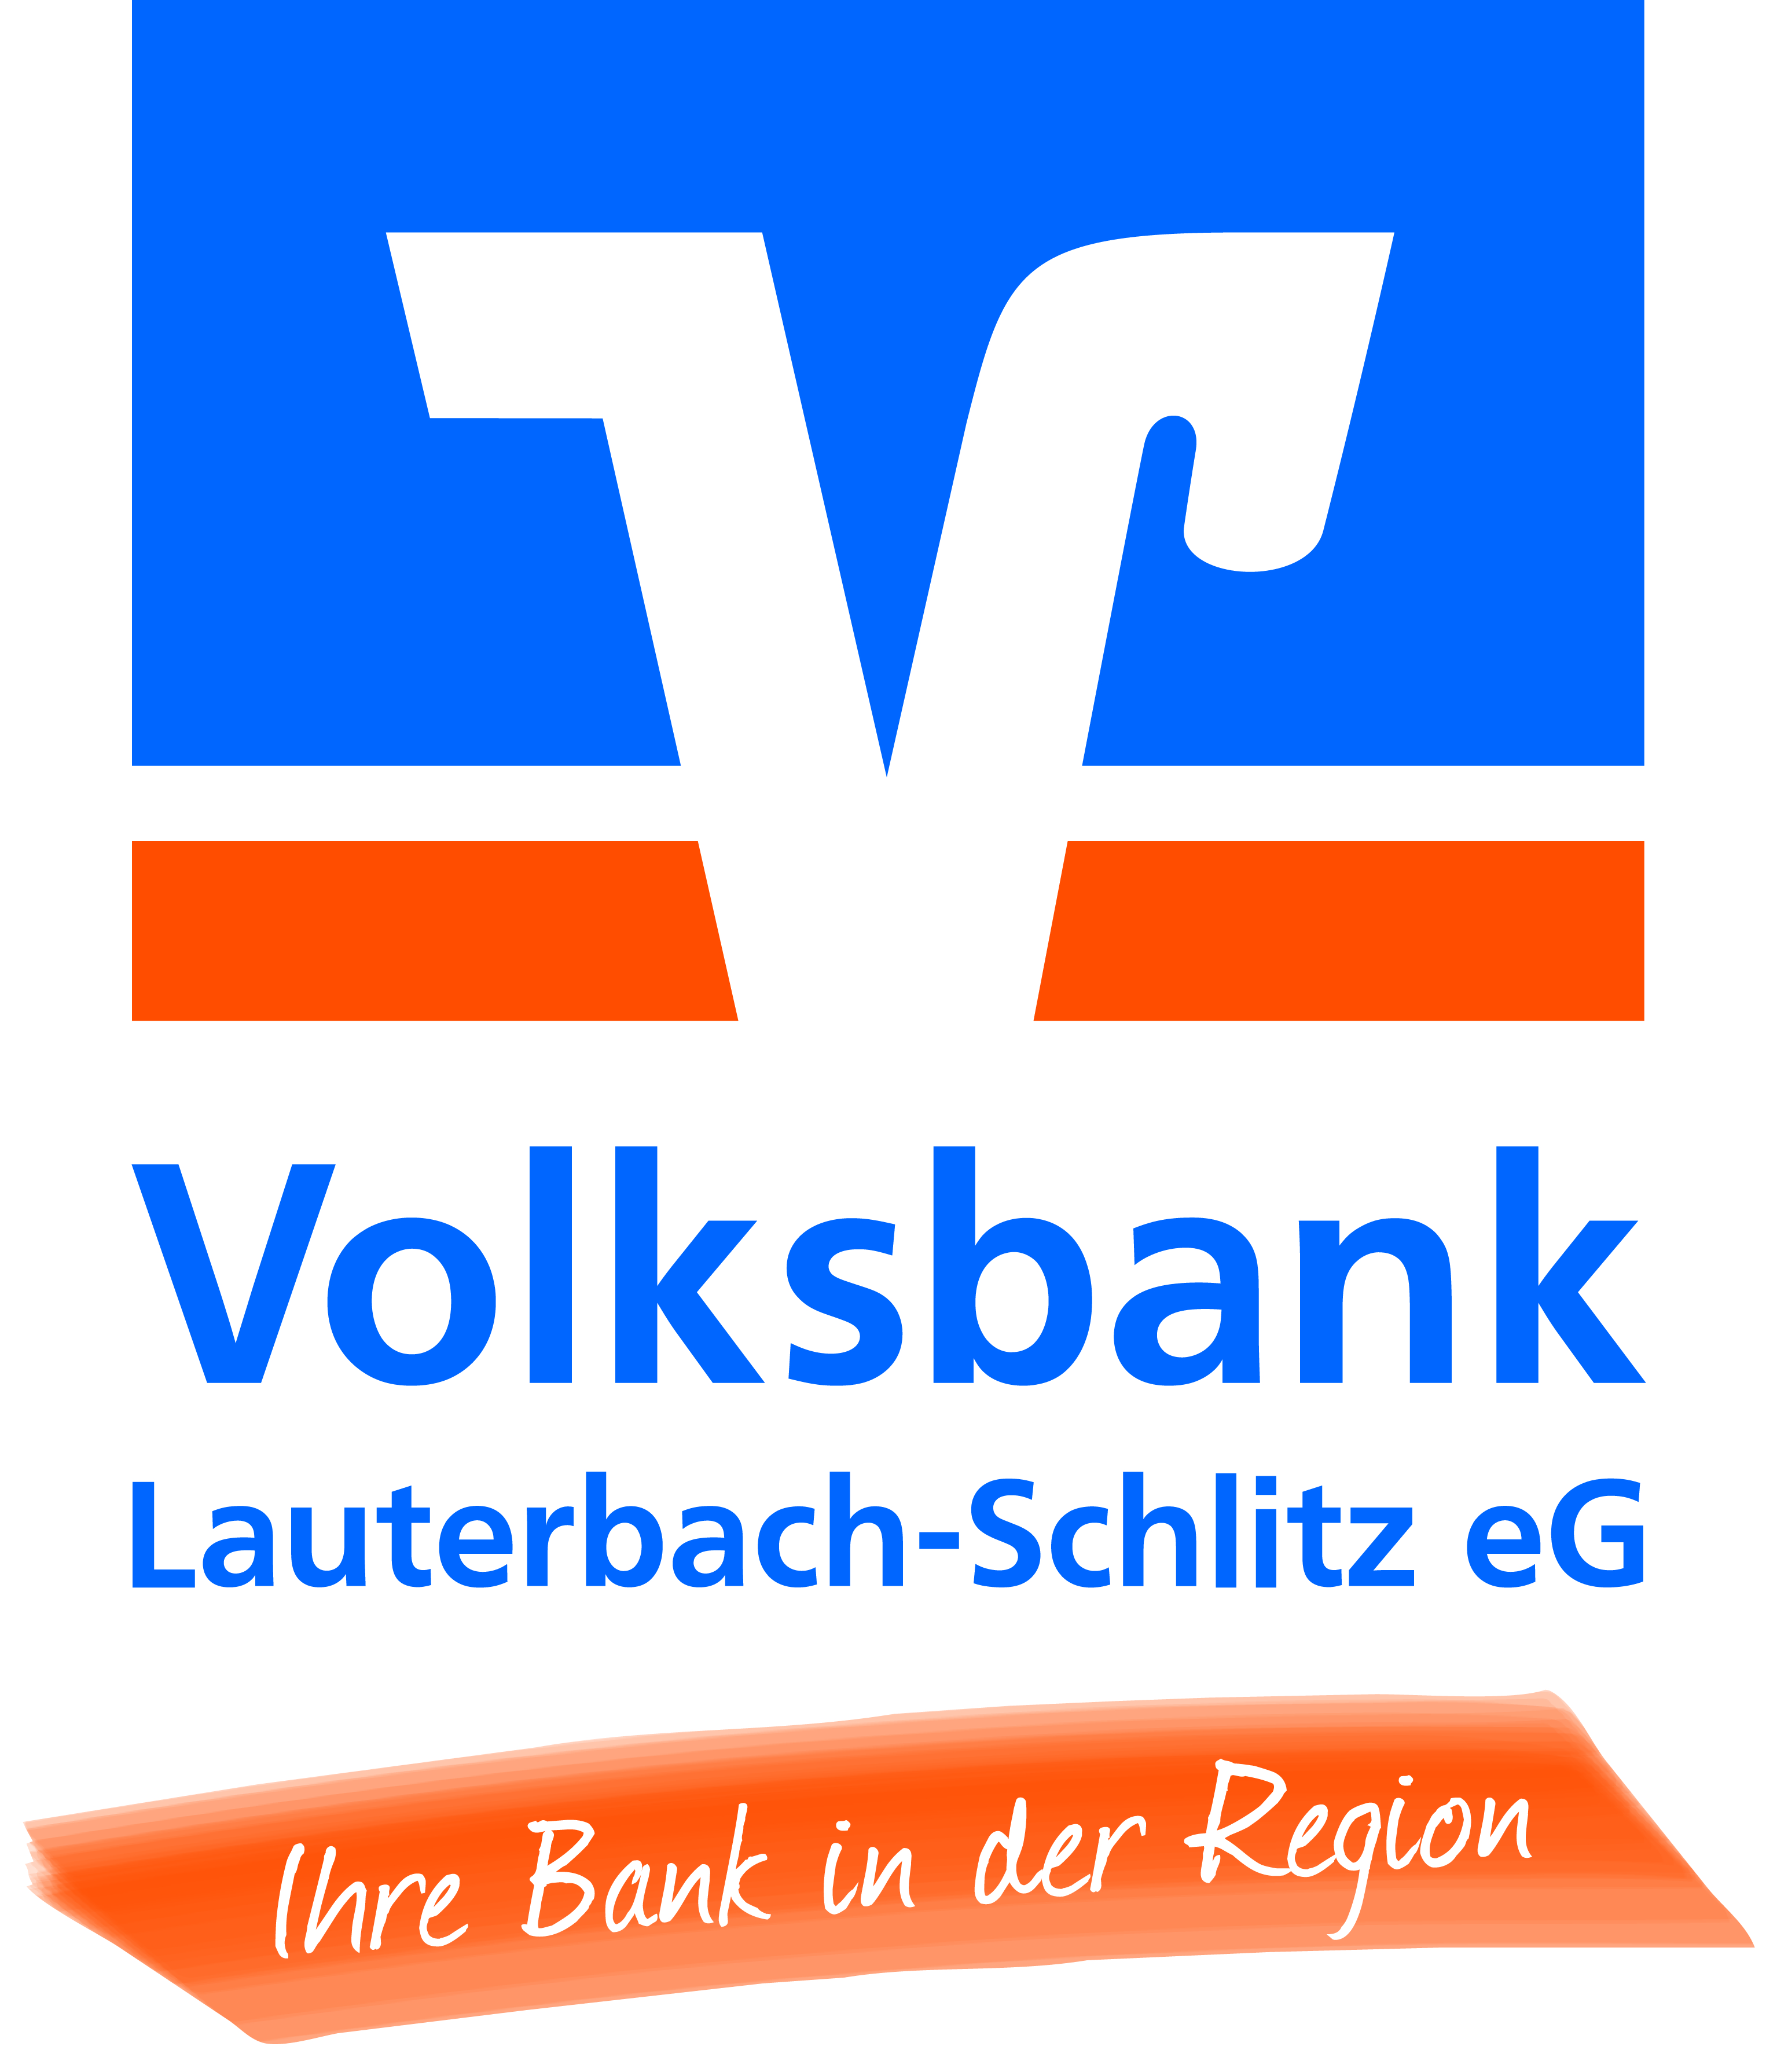 RZ VB Lauterbach Schlitz Logo Bildmarke links 300dpi 4c Bild Kompakt hoch